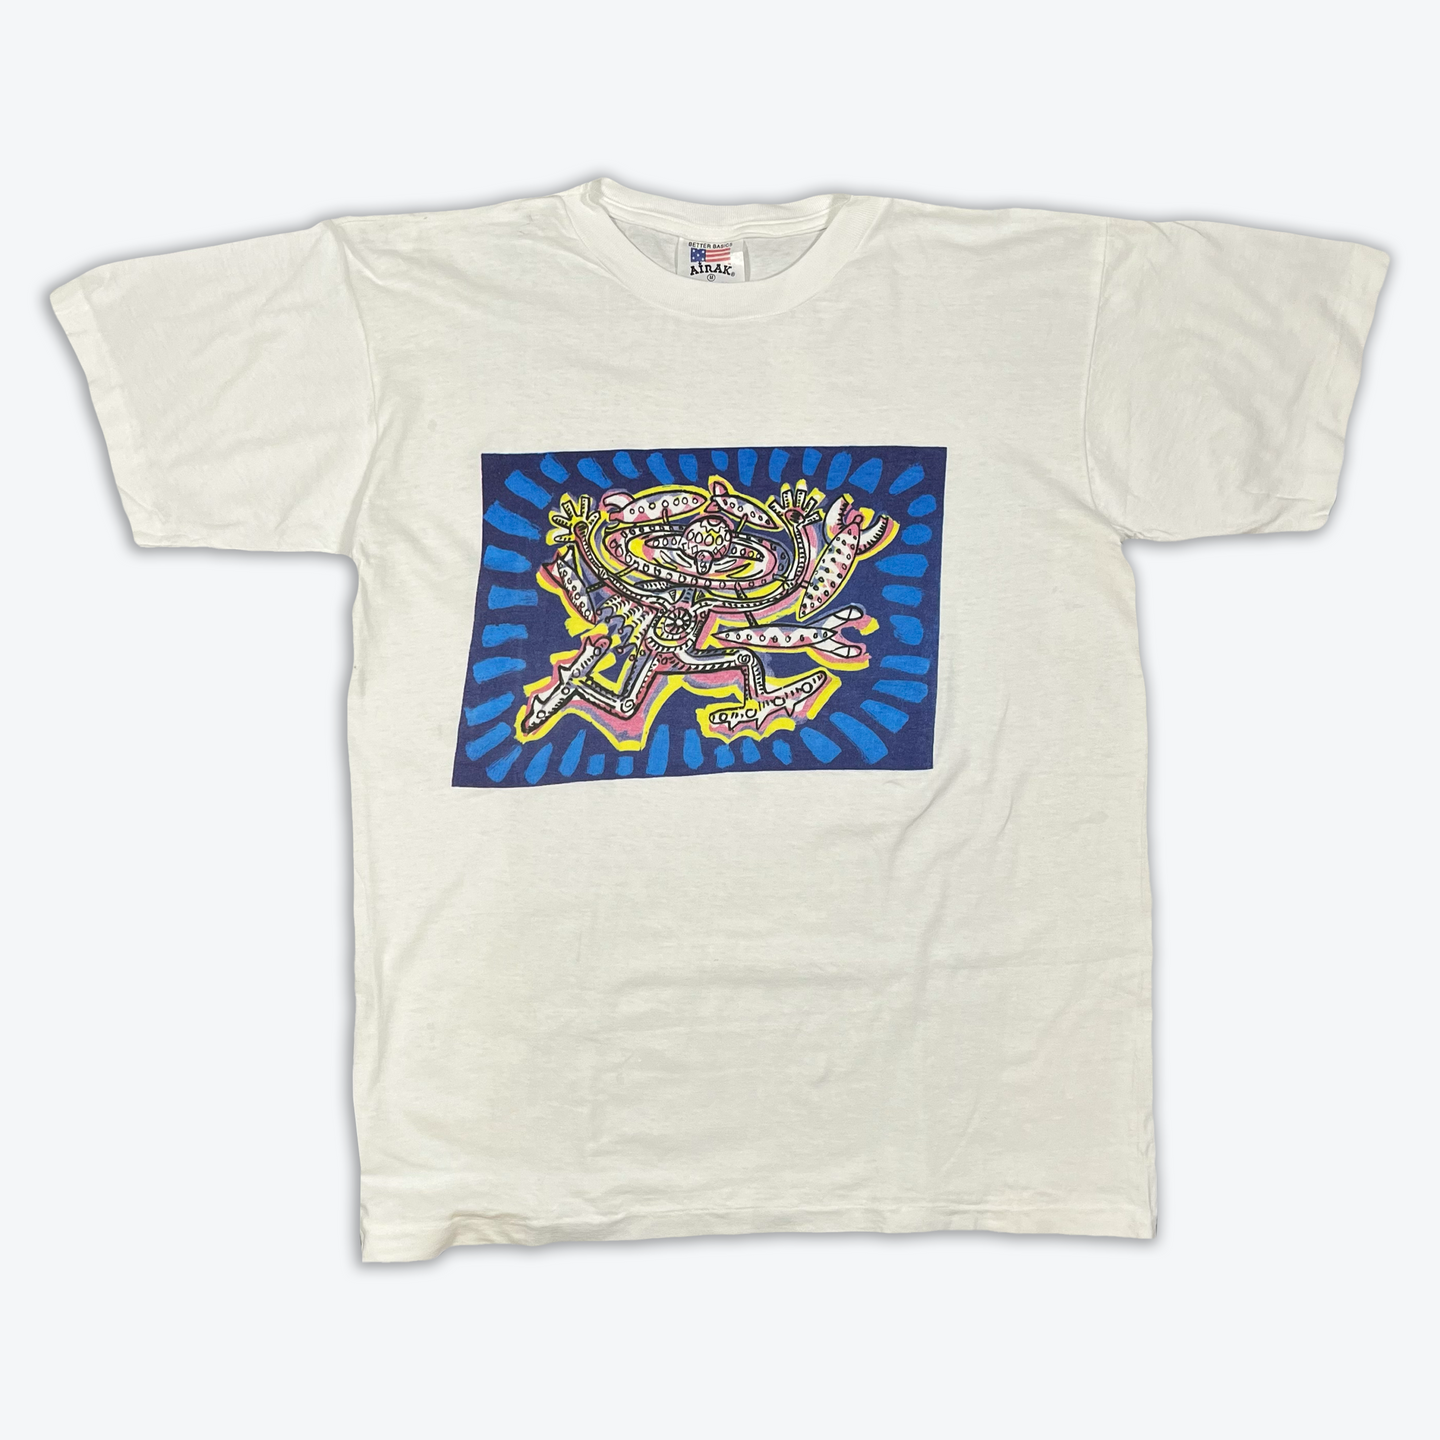 90's Rave T-shirt (White)